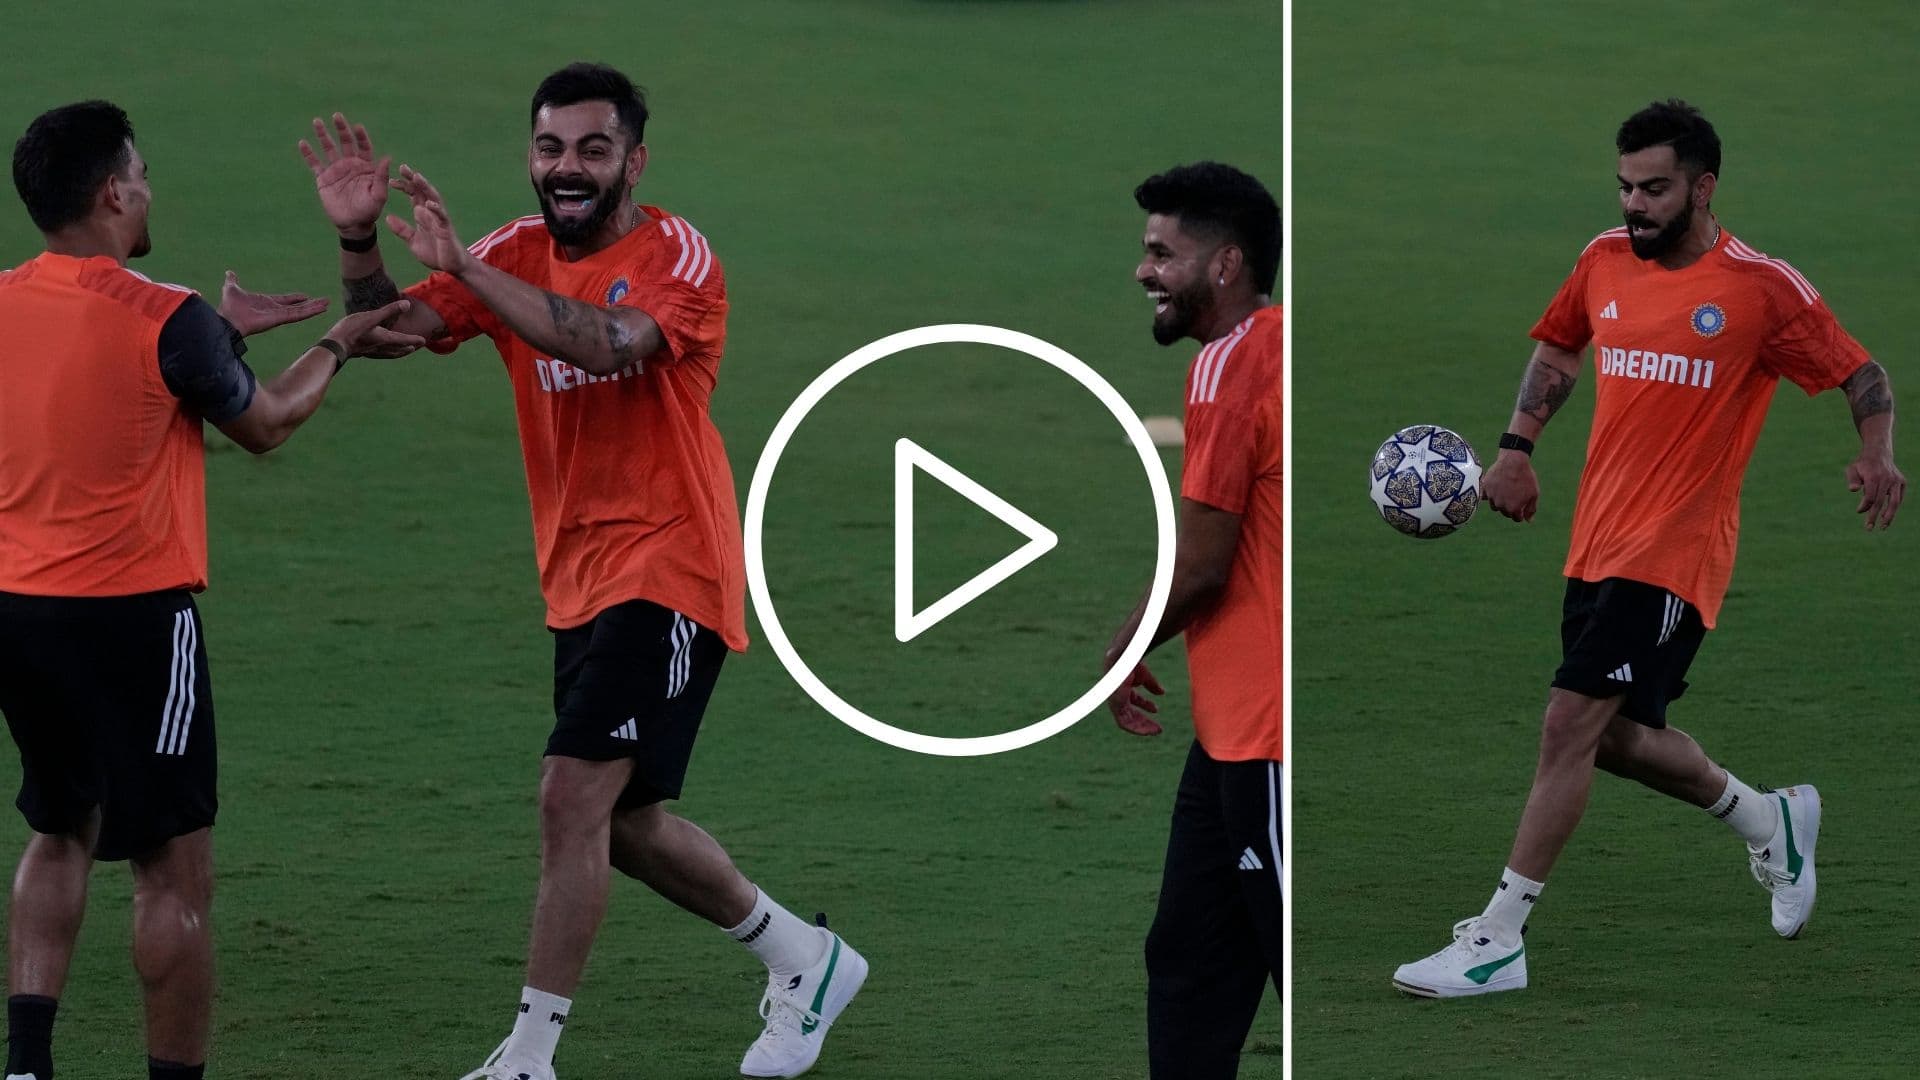 [Watch] 'Virat Kohli Goat Of Football' - Fan Made Video Goes Viral